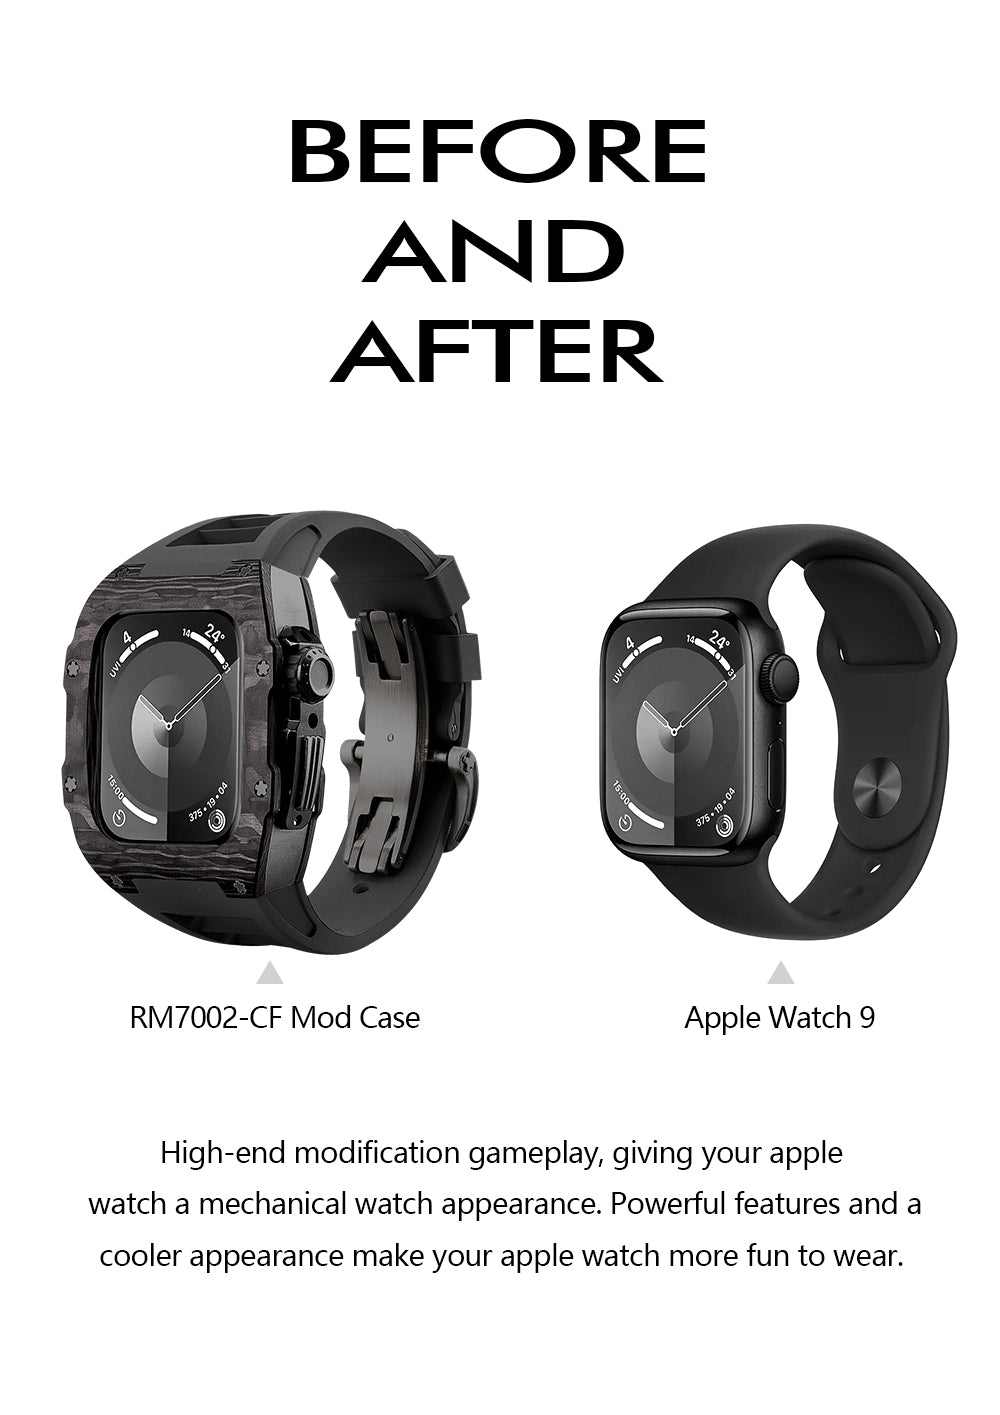 Apple Watch Case 44mm - Carbon Fiber Ti Black Case + Blue Fluoro Strap (8 Screws)